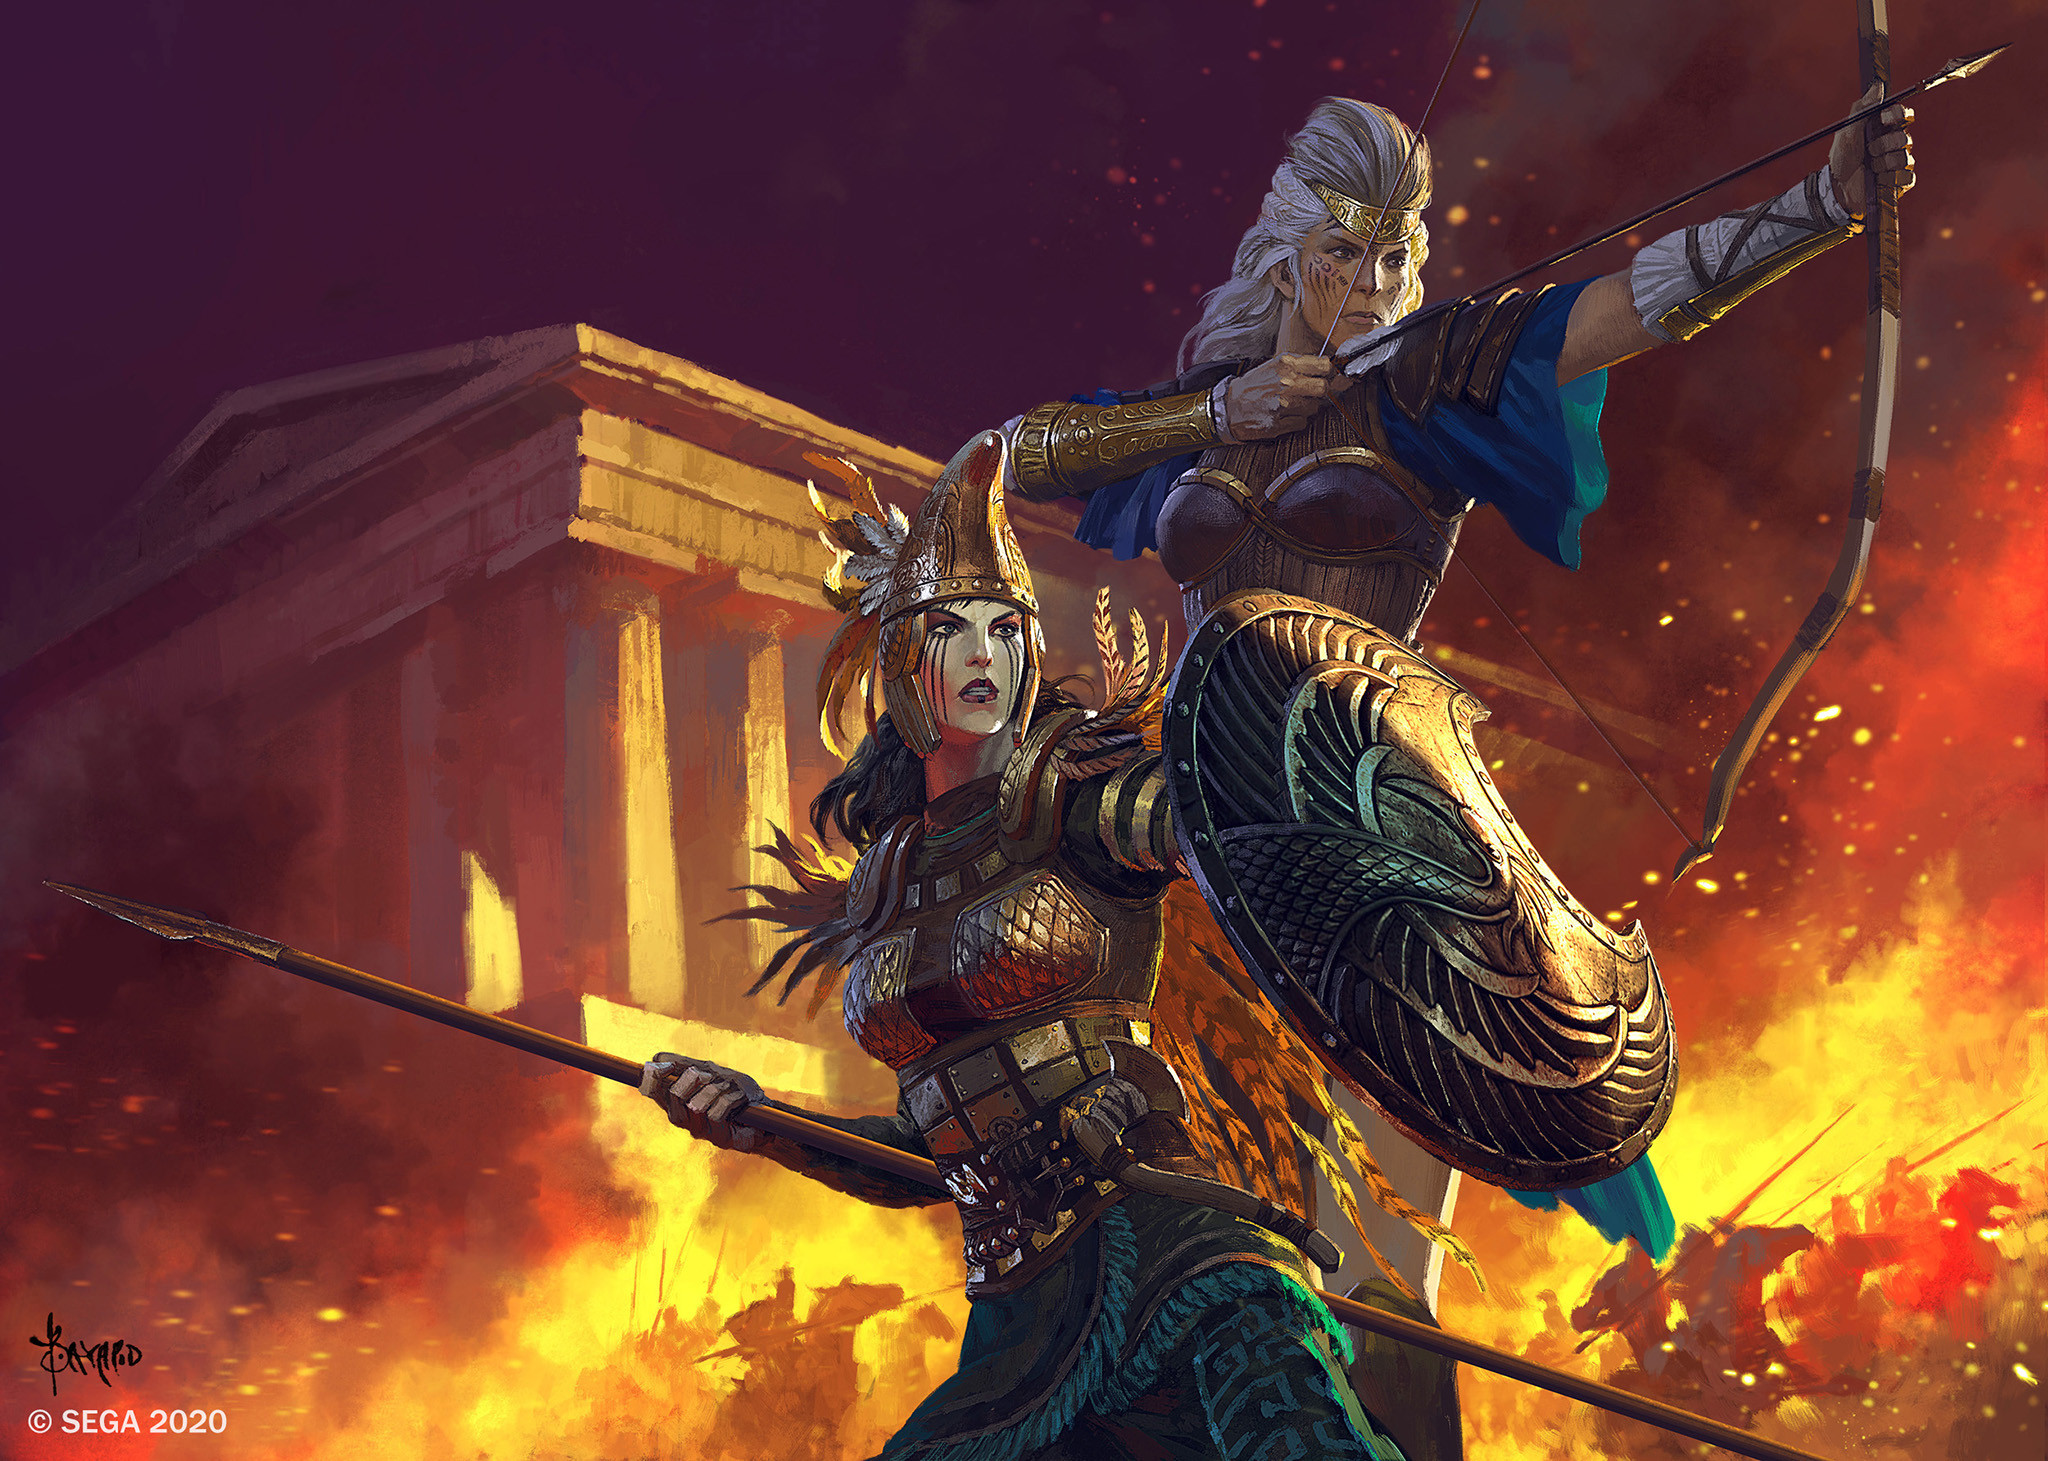 Video Game A Total War Saga: TROY HD Wallpaper | Background Image